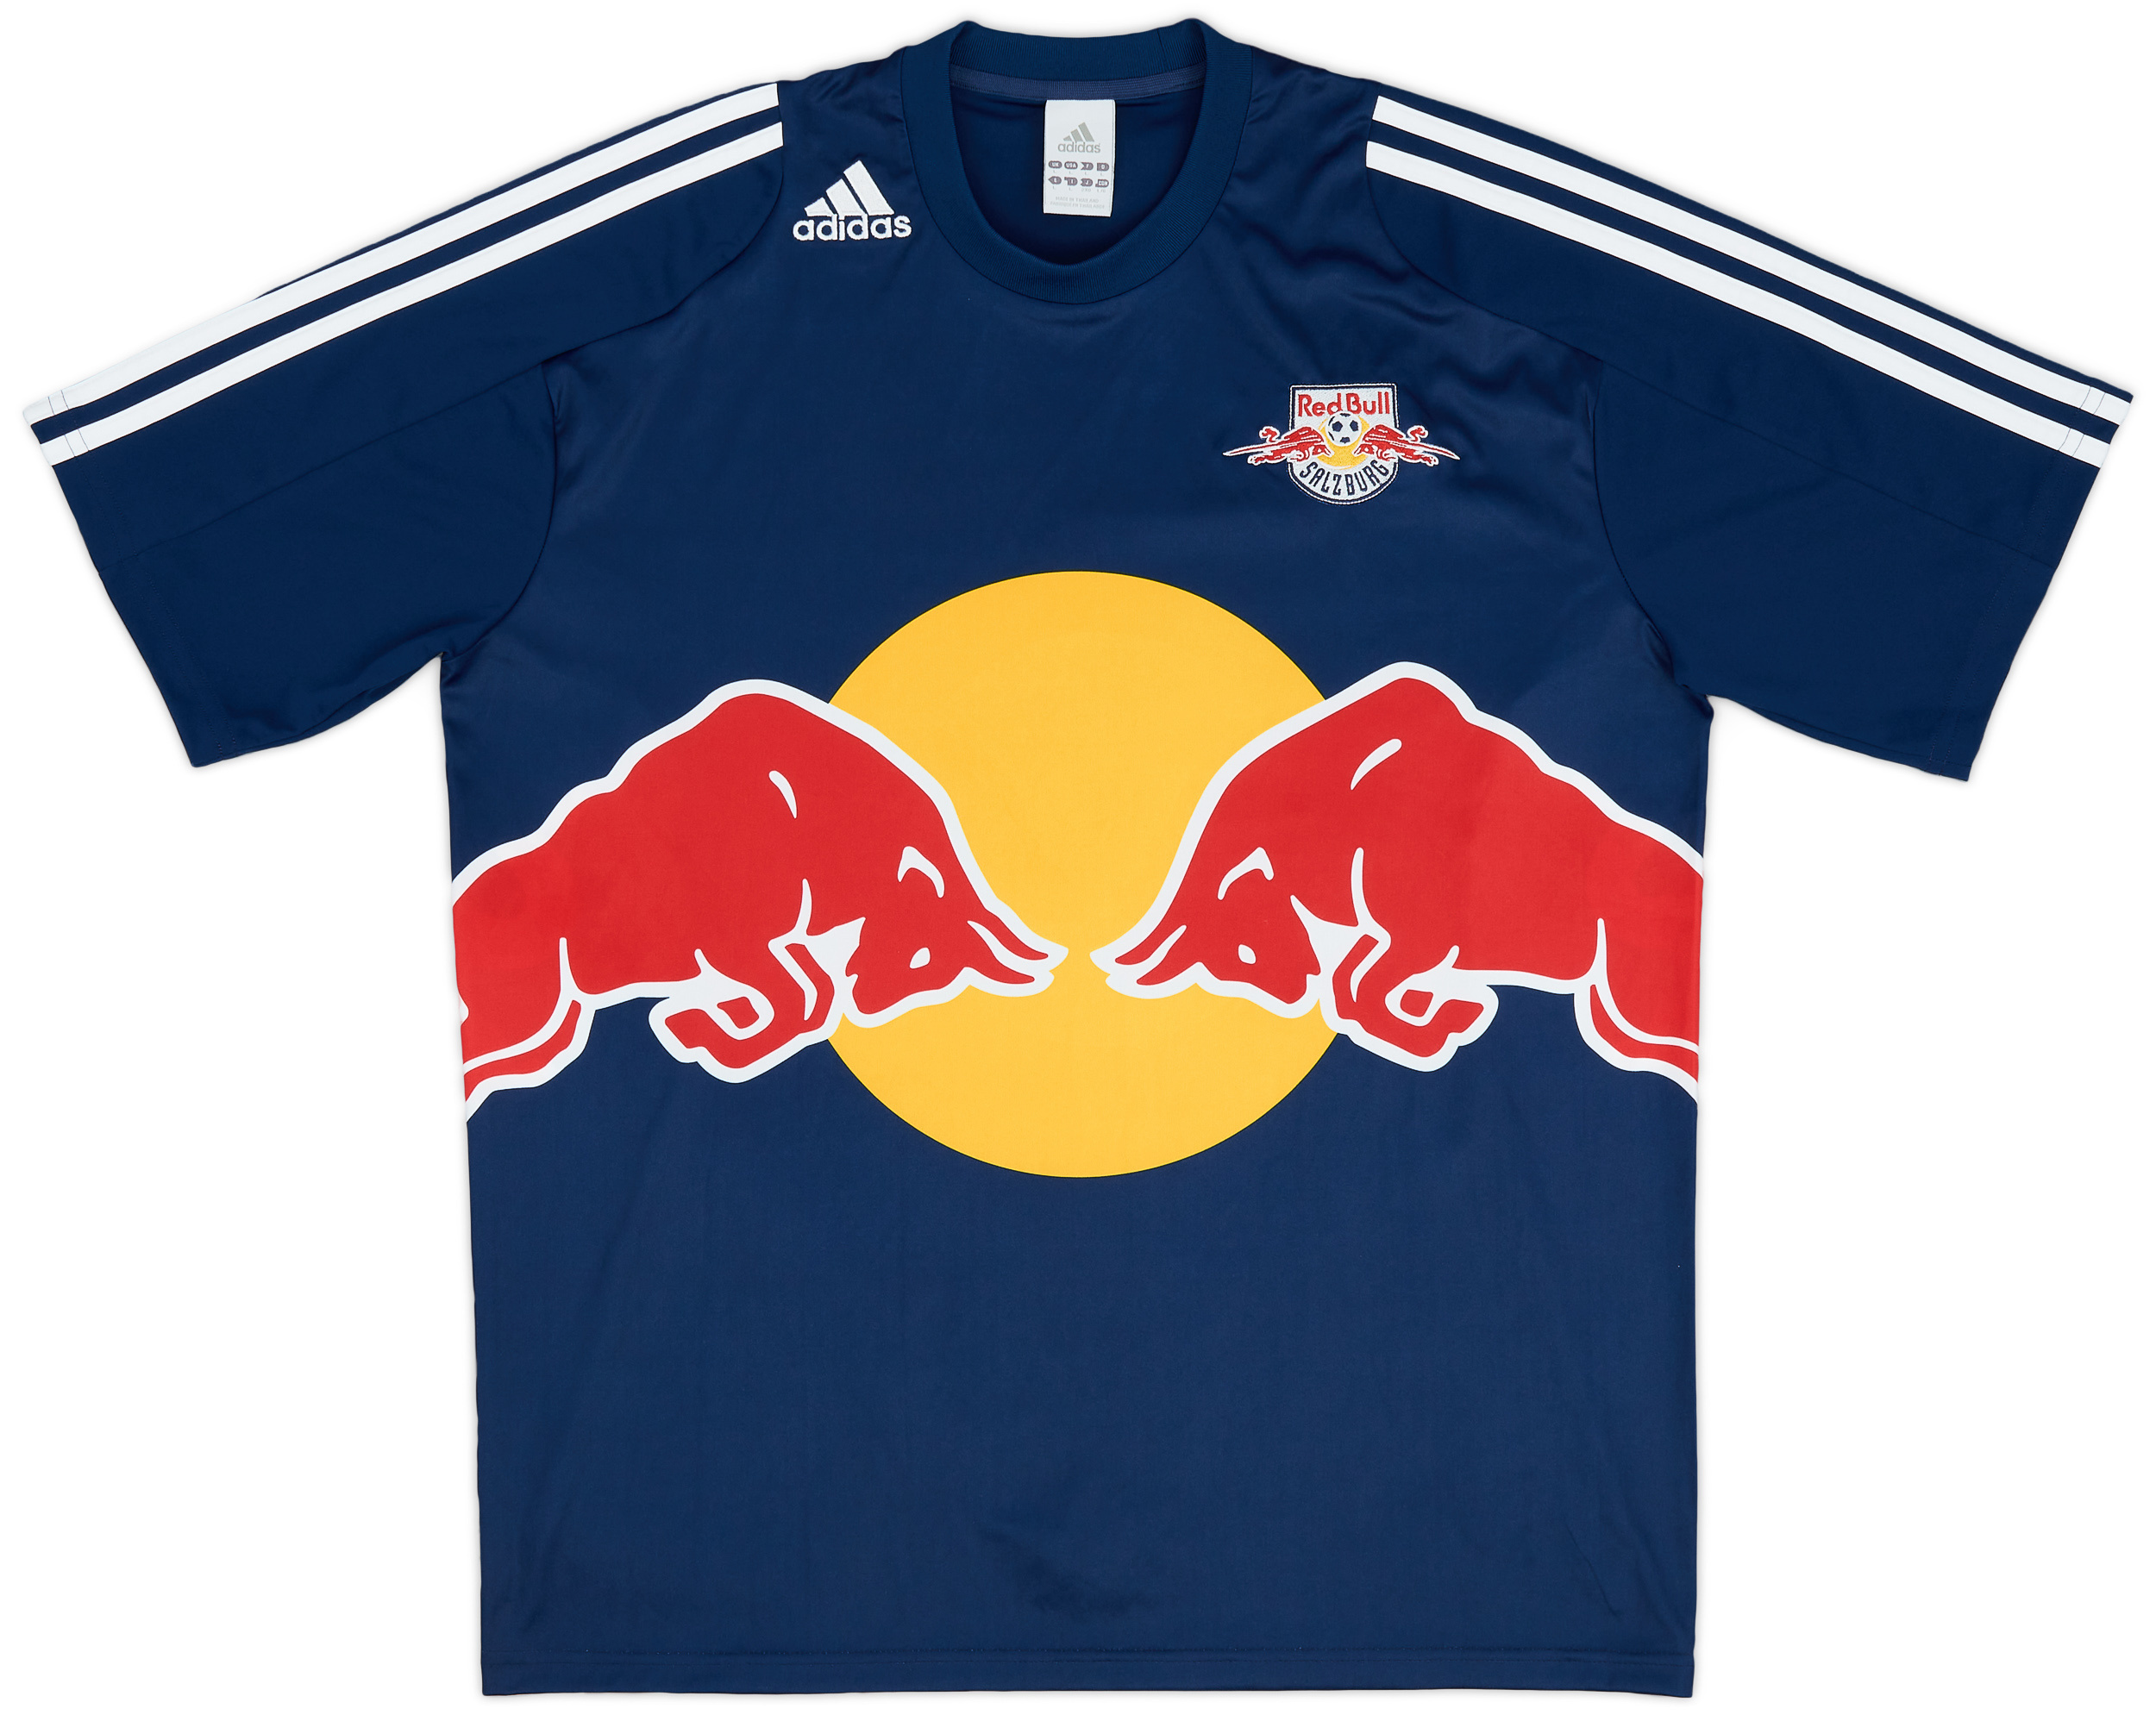 2006-07 Red Bull Salzburg Away Shirt - 8/10 - ()